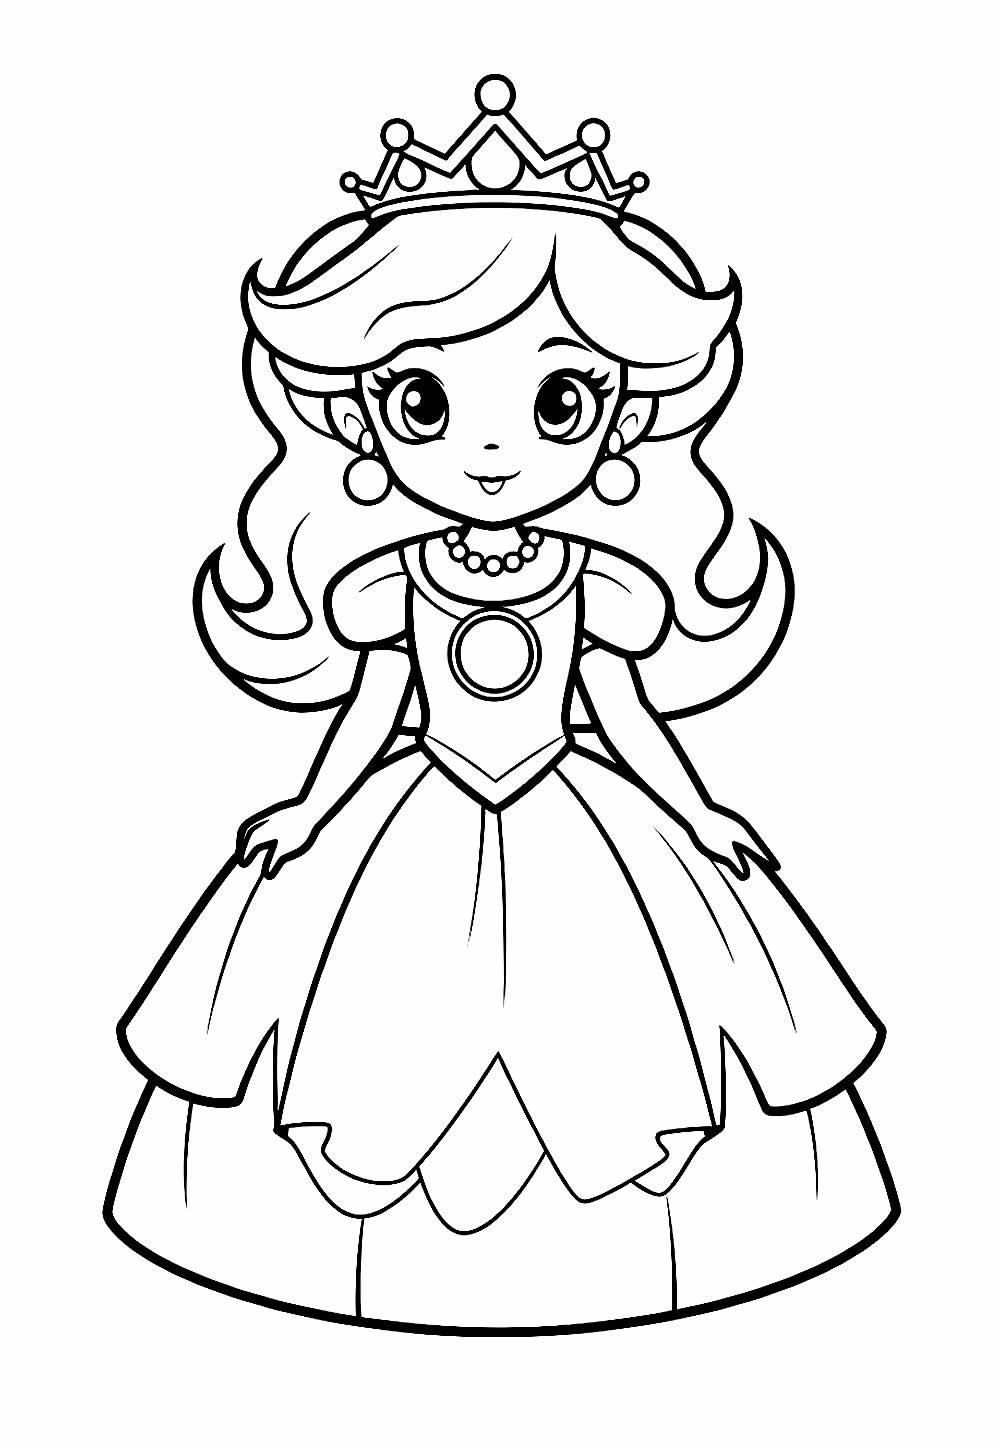 Desenho para colorir de Princesa